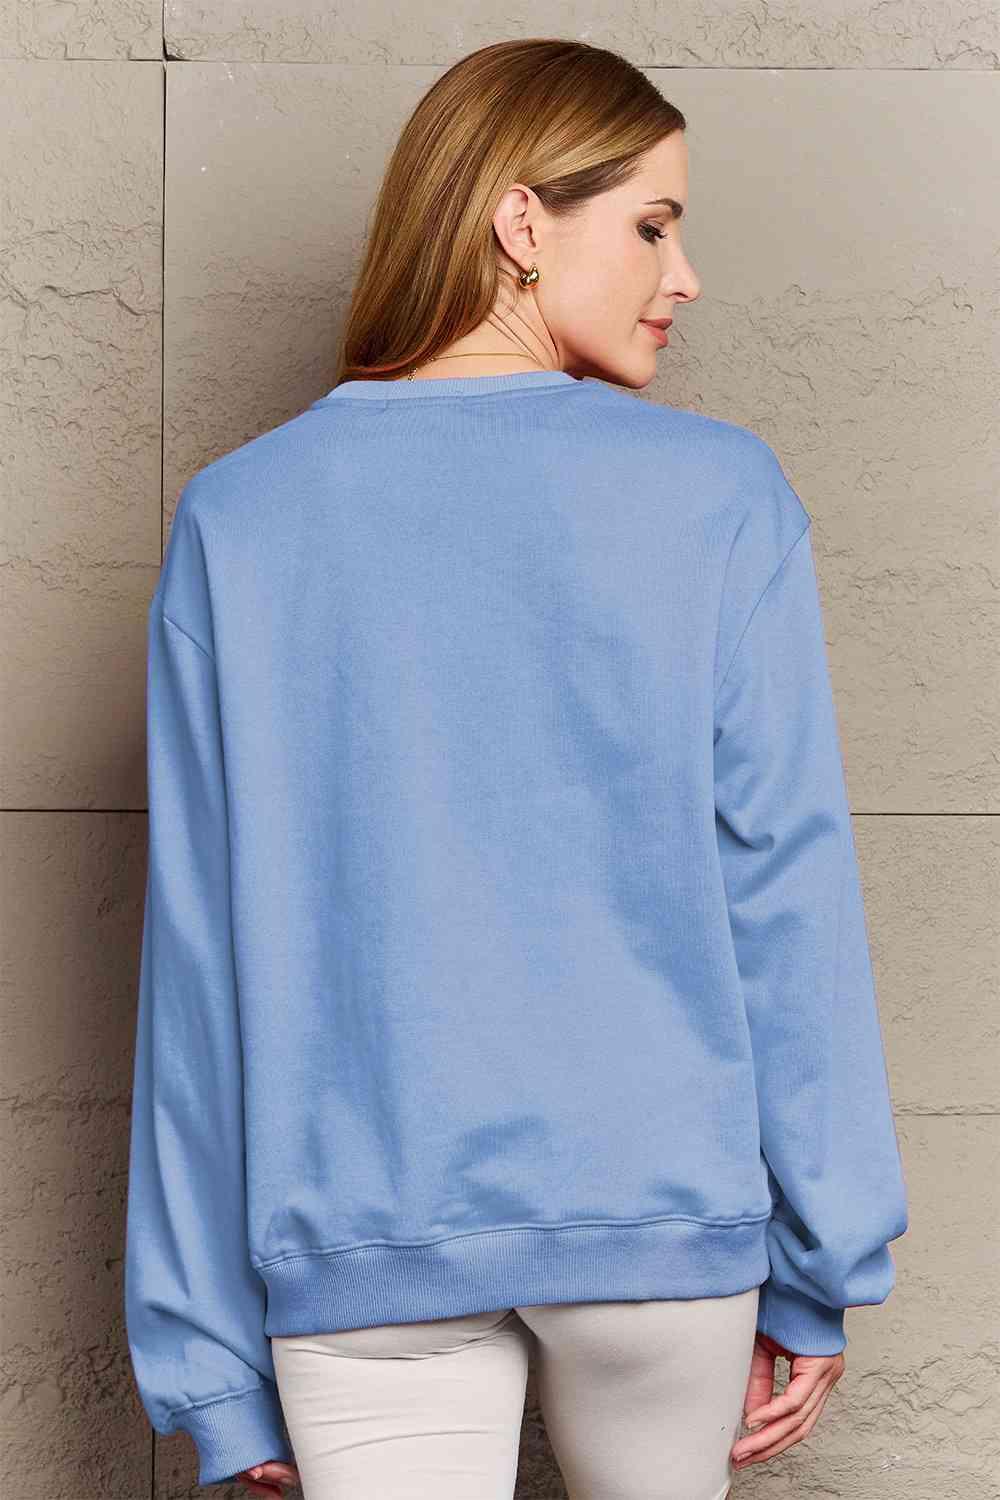 Simply Love Full Size MAMA Graphic Long Sleeve Sweatshirt - Immenzive